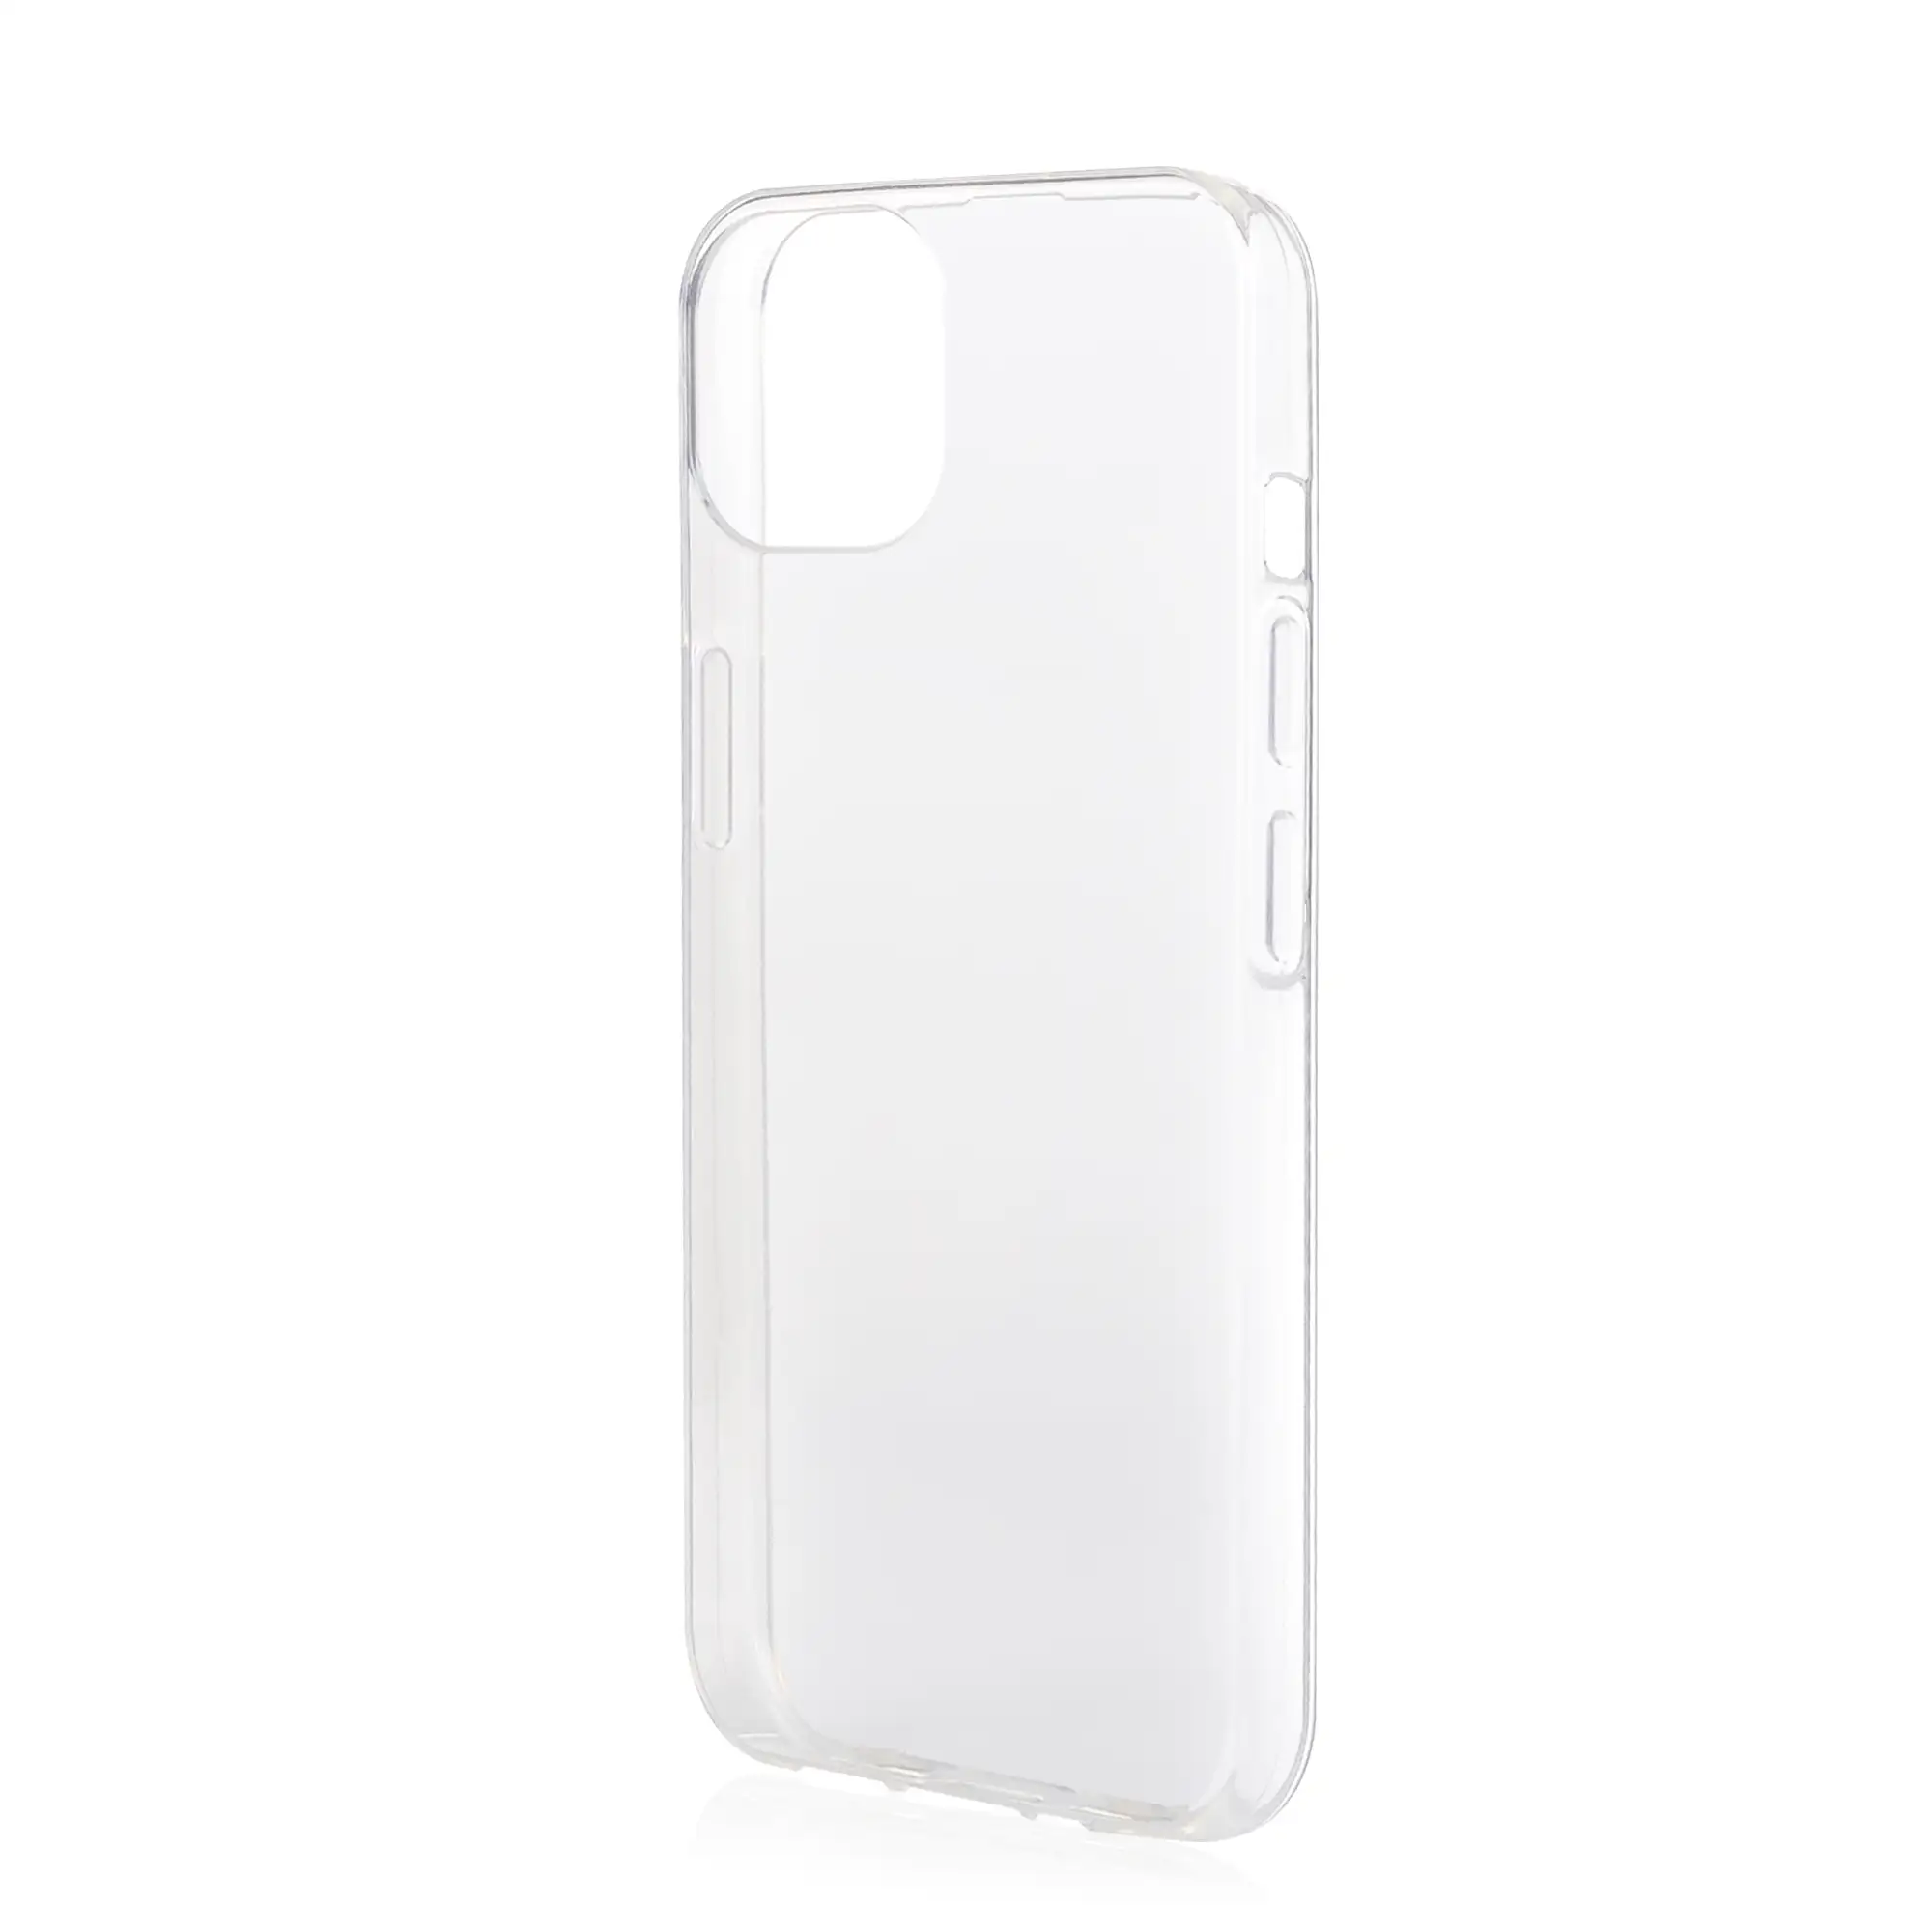 Carcasa Slim Crystal Clear de TPU transparente para iPhone 13 Mini.